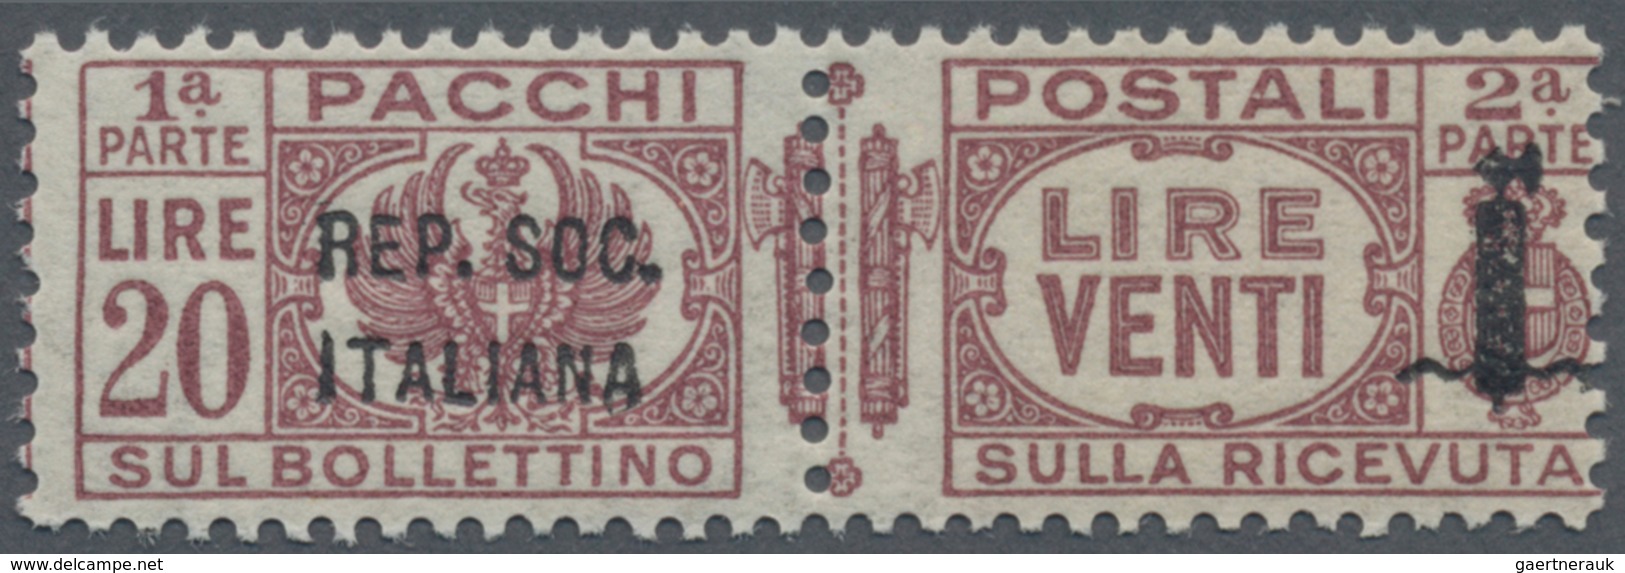 Italien - Paketmarken: 1944, "REPUBBLICA SOCIALE" Overprints, 20l. Lilac Unmounted Mint. Michel 650, - Paketmarken